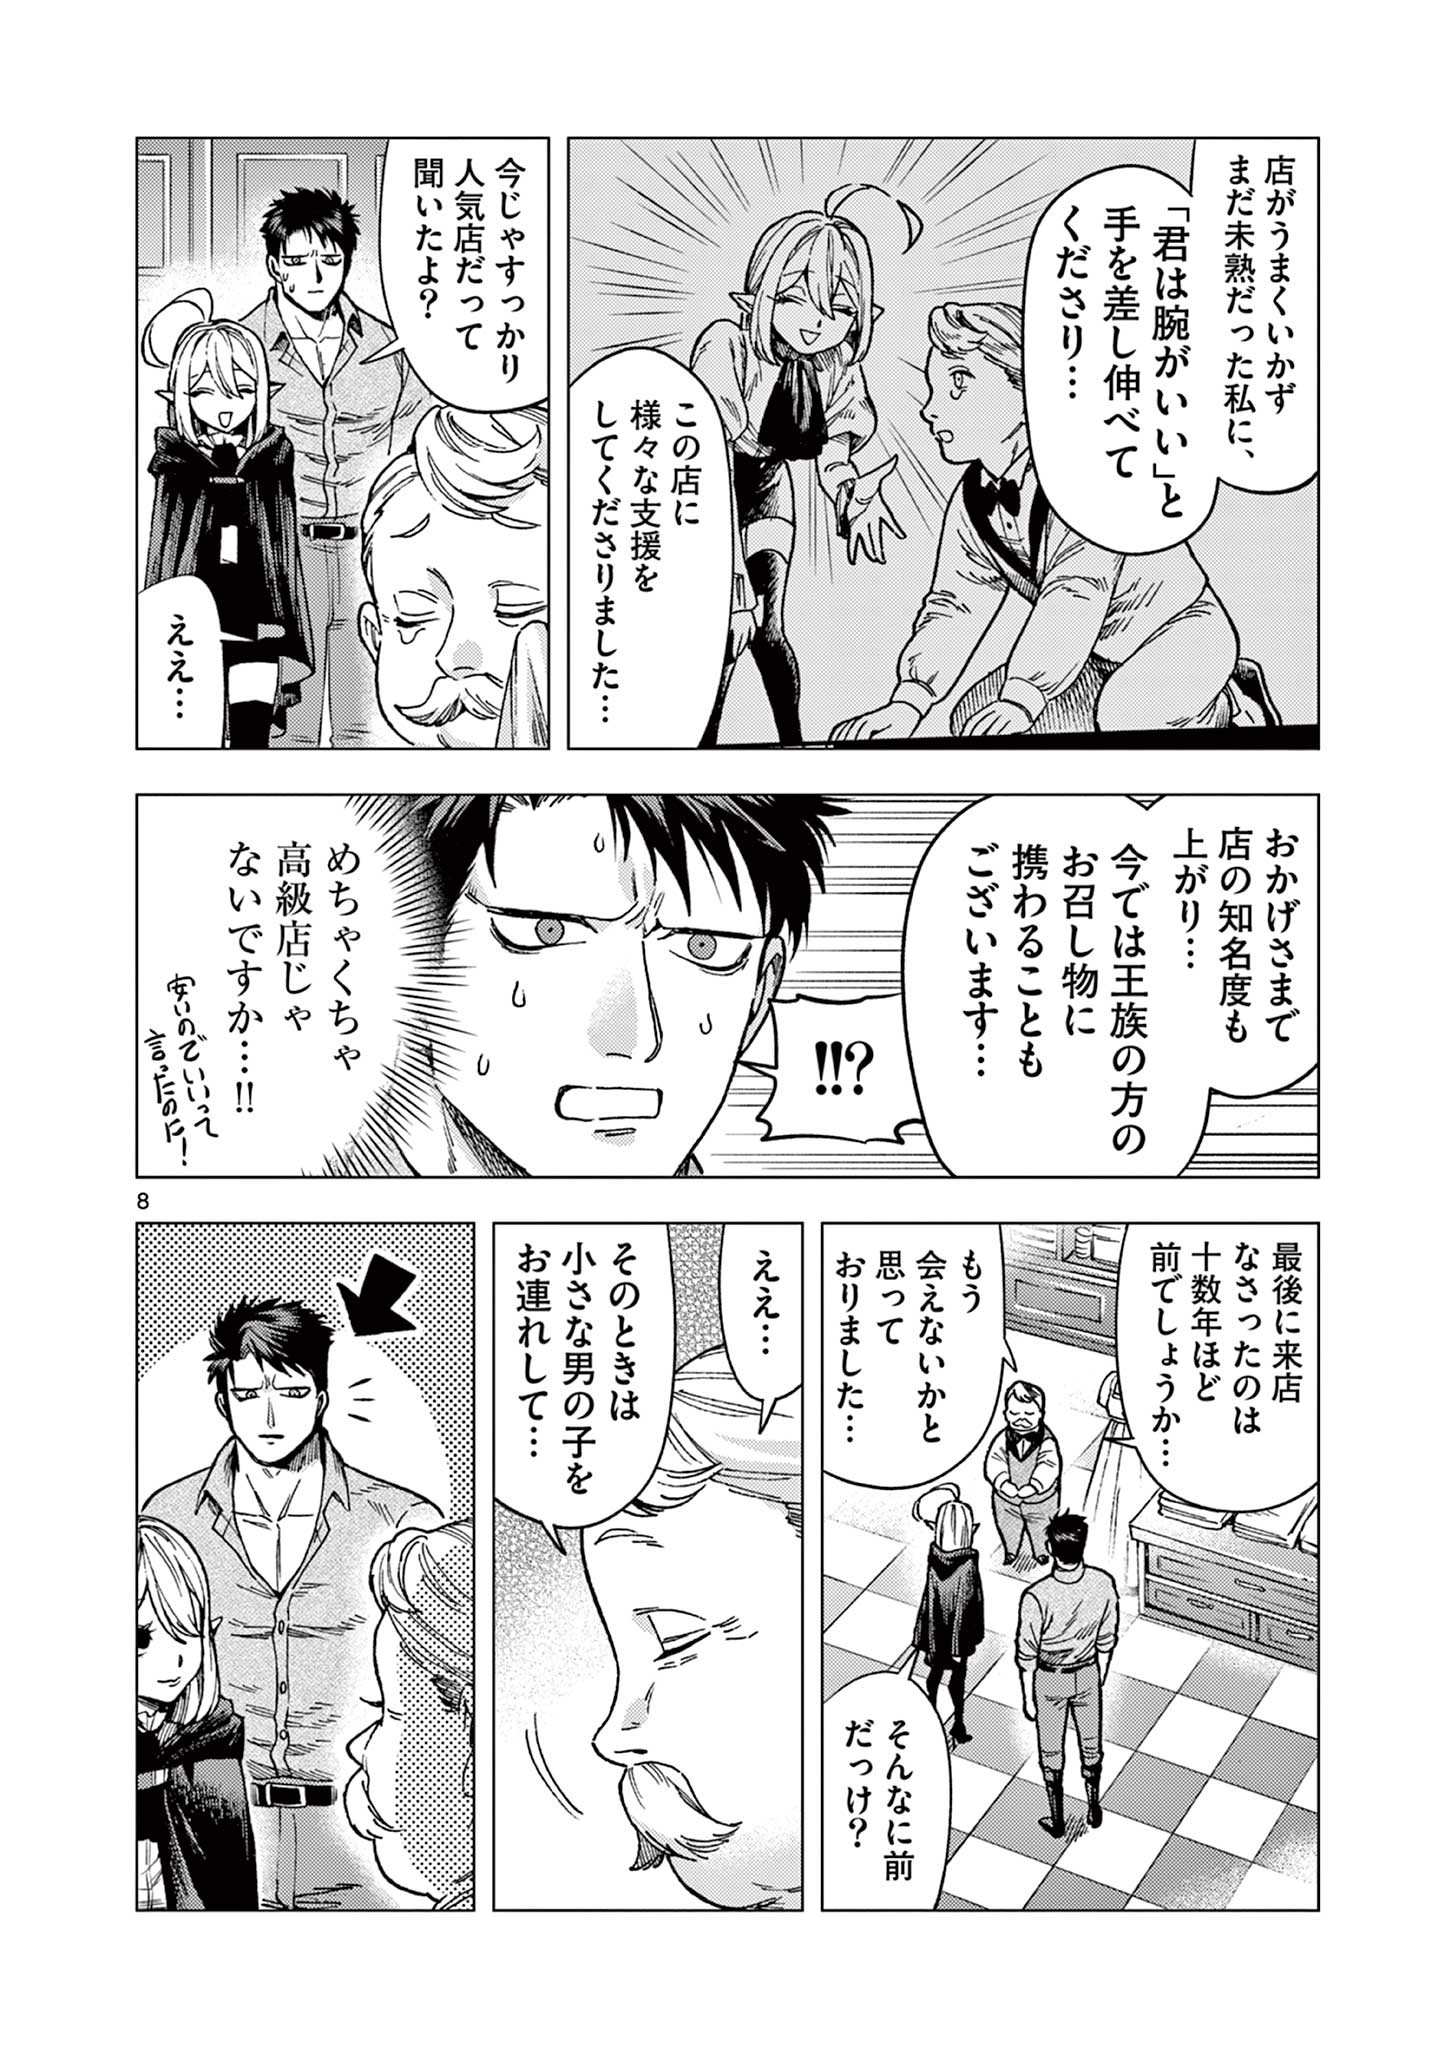 Raul to Kyuuketsuki - Chapter 3 - Page 8